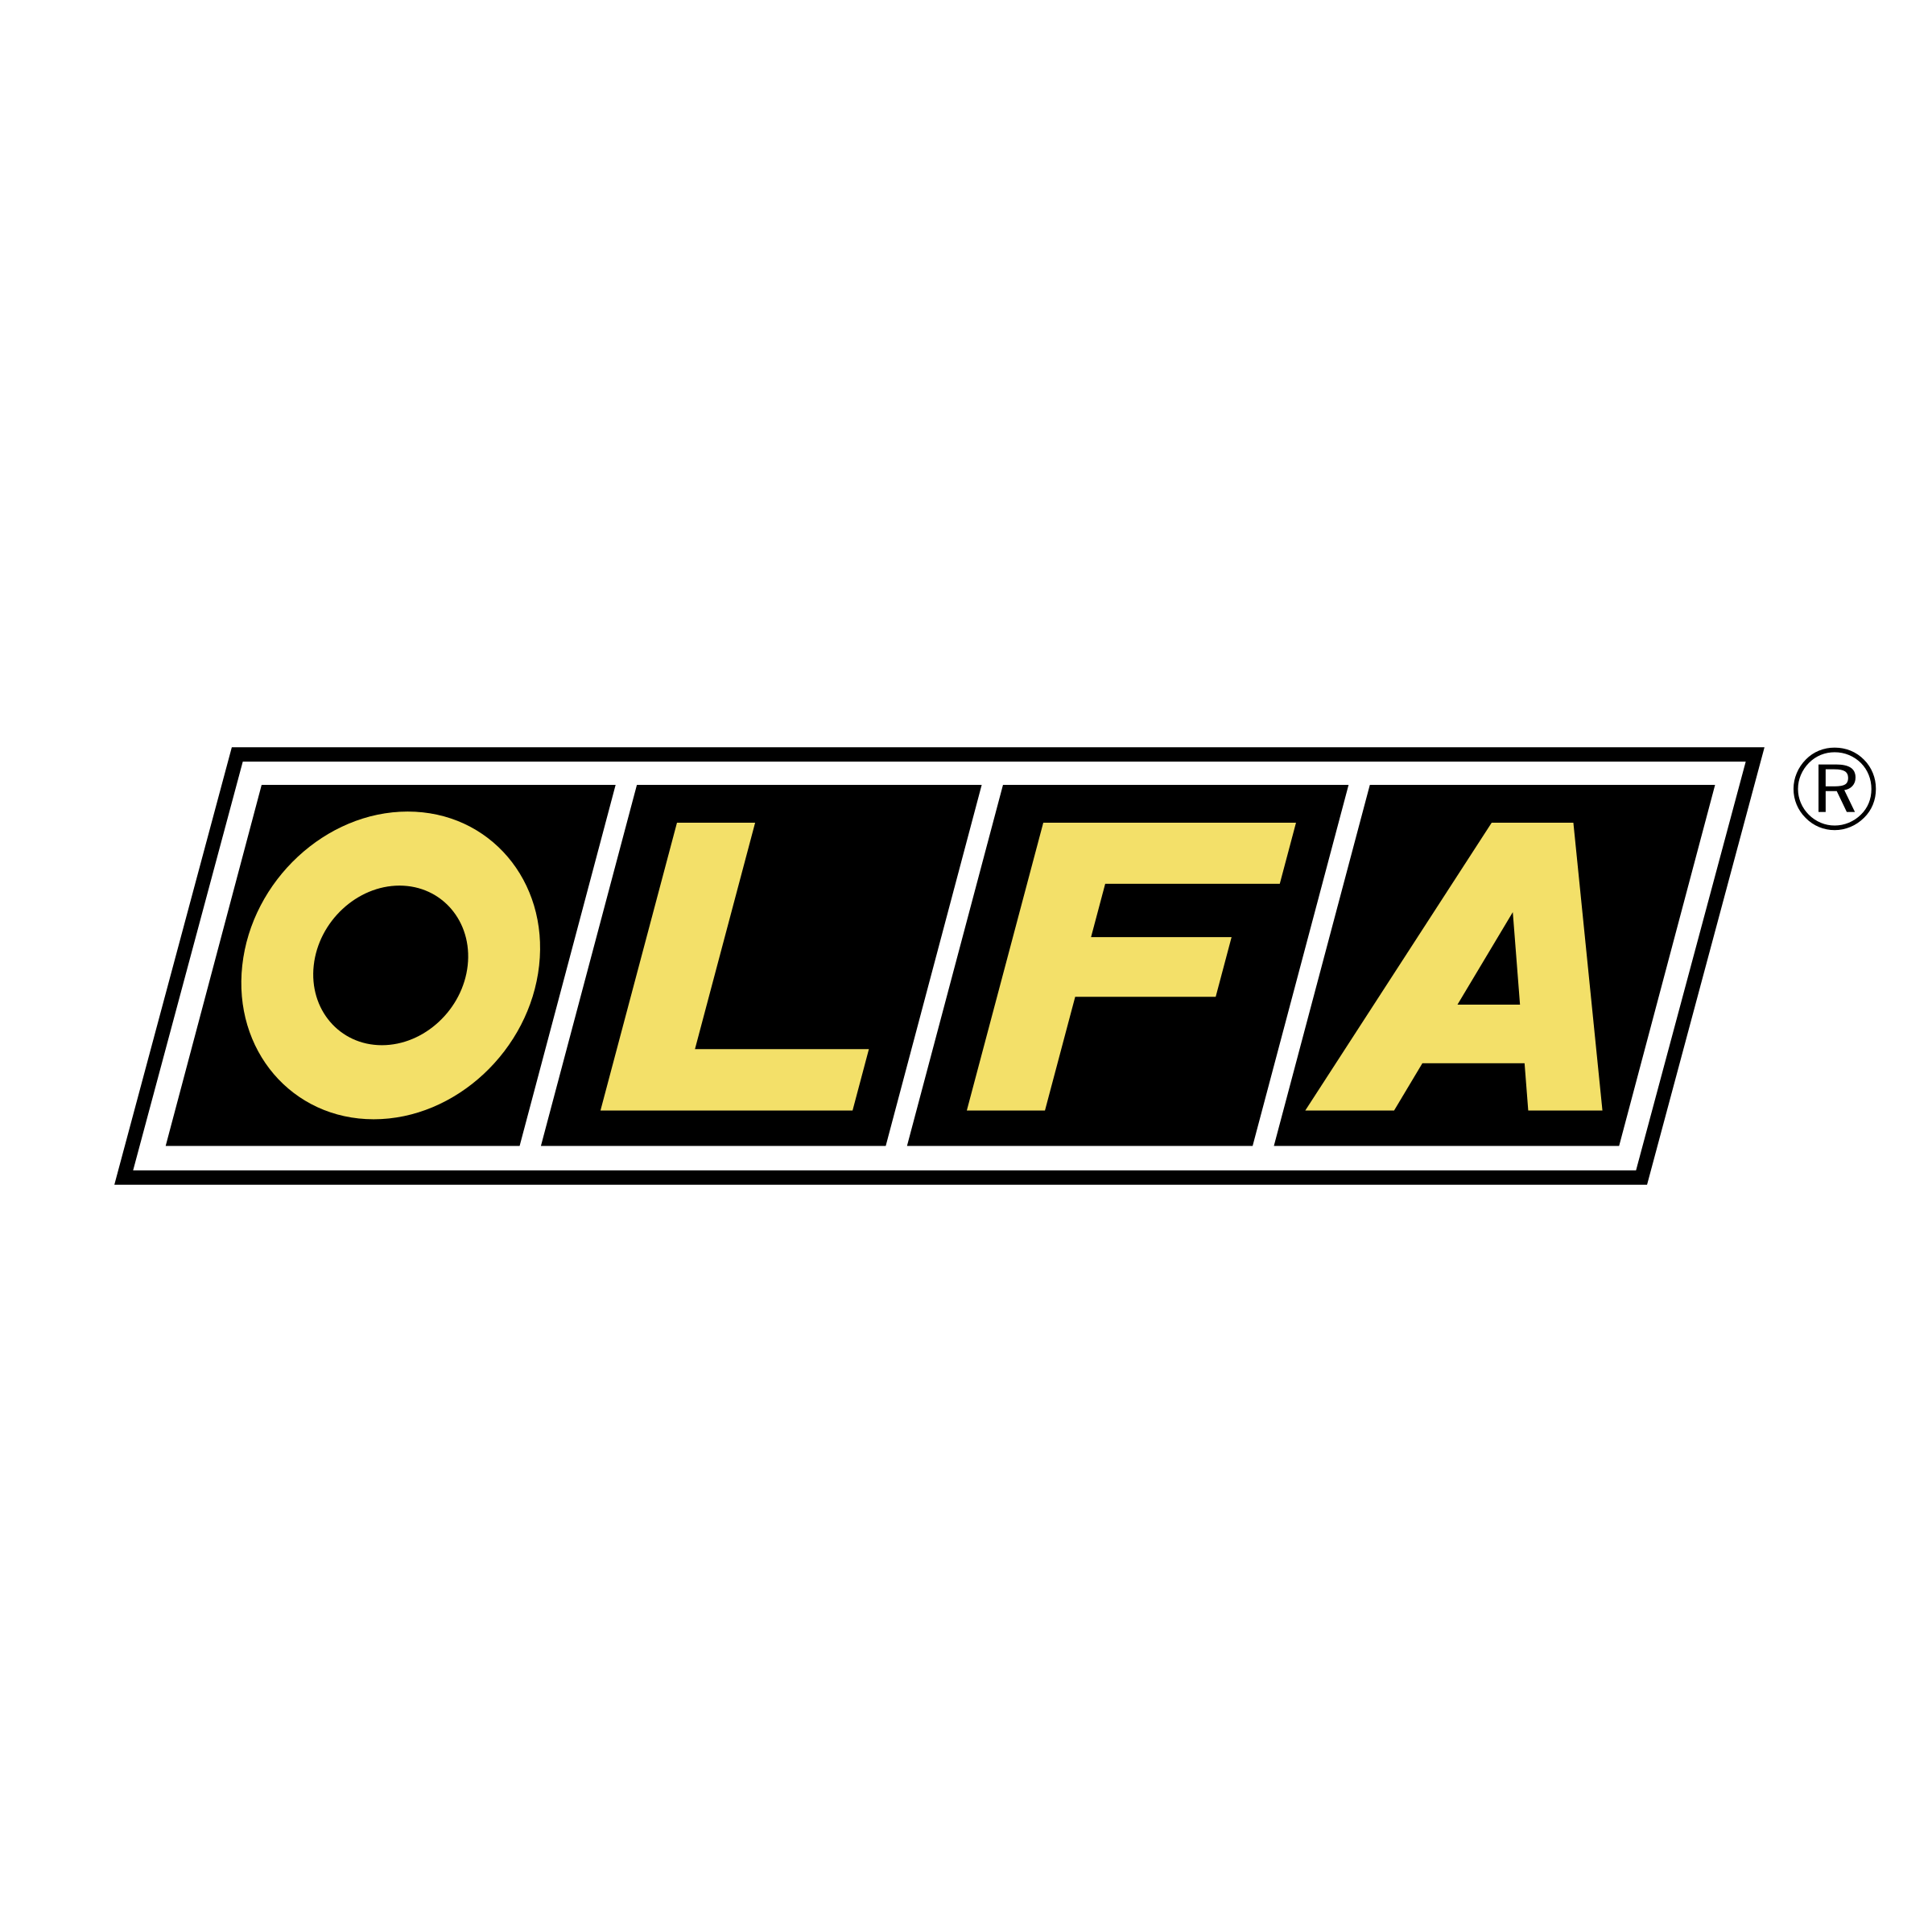 Olfa Logo - Olfa Logo PNG Transparent & SVG Vector - Freebie Supply